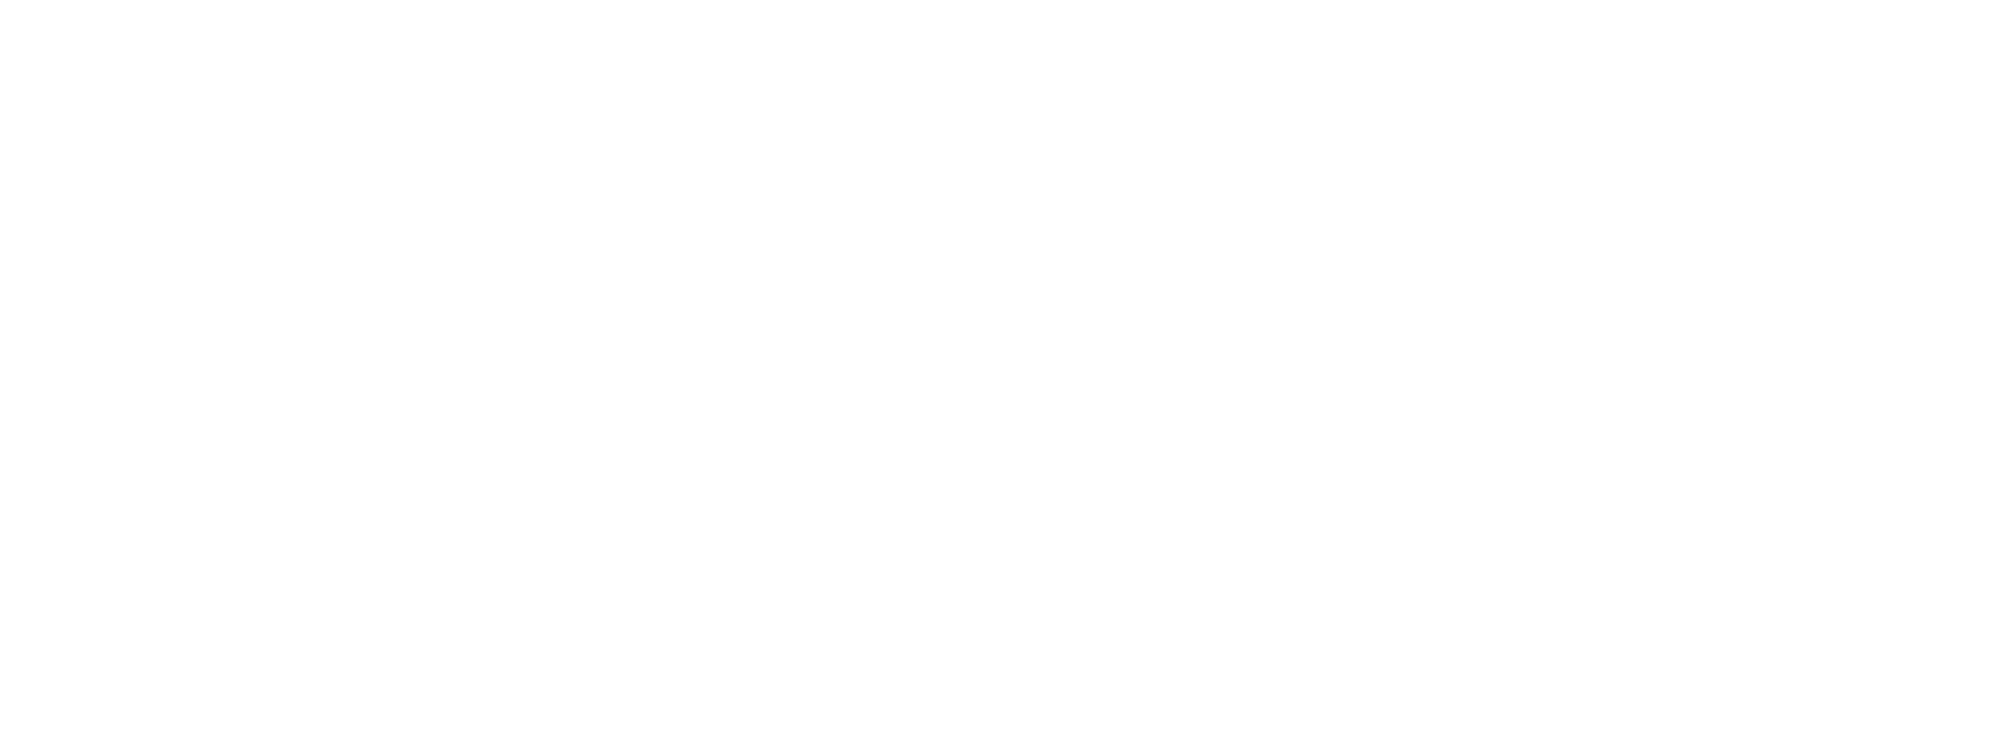 GobEsp_ACE-xacobeo logo_3 copy